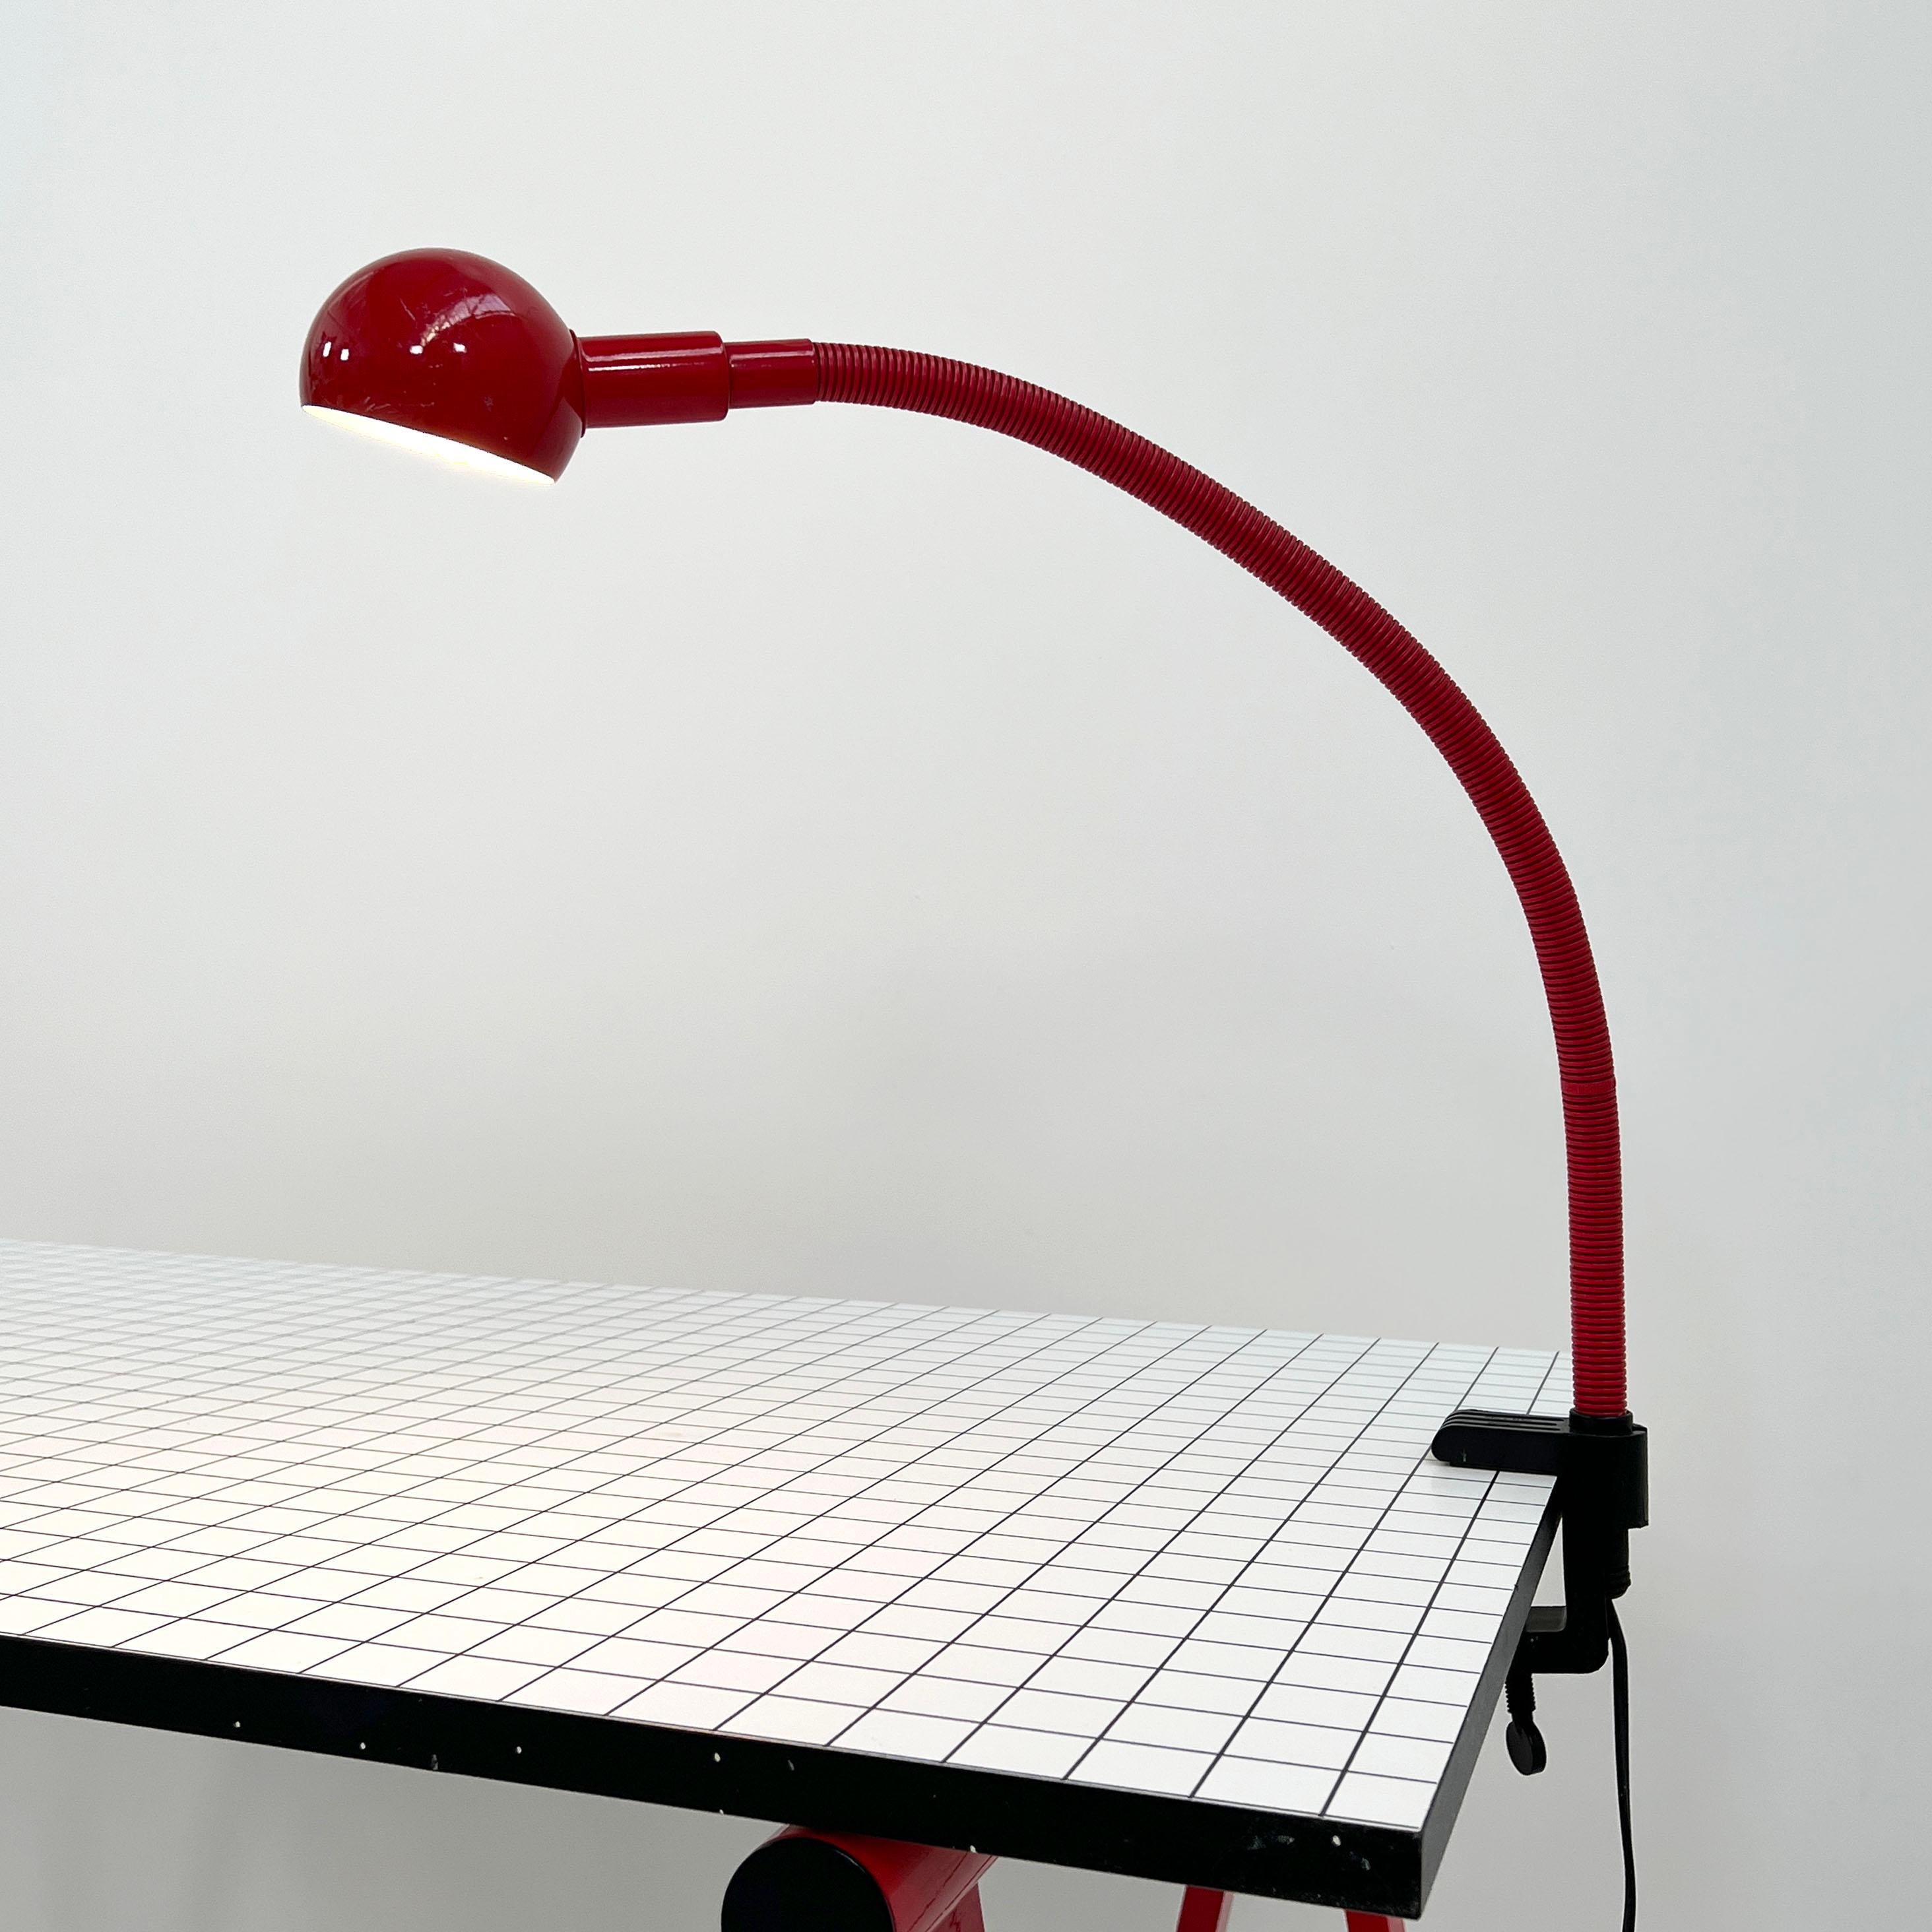 Red Hebi desk lamp by Isao Hosoe for Valenti, 1970s
Designer - Isao Hosoe 
Producer - Valenti
Model - Hebi Desk Lamp
Design Period - Seventies
Measurements - width 27 cm x depth 27 cm x height 40 cm
Materials - Metal, Plastic
Color -